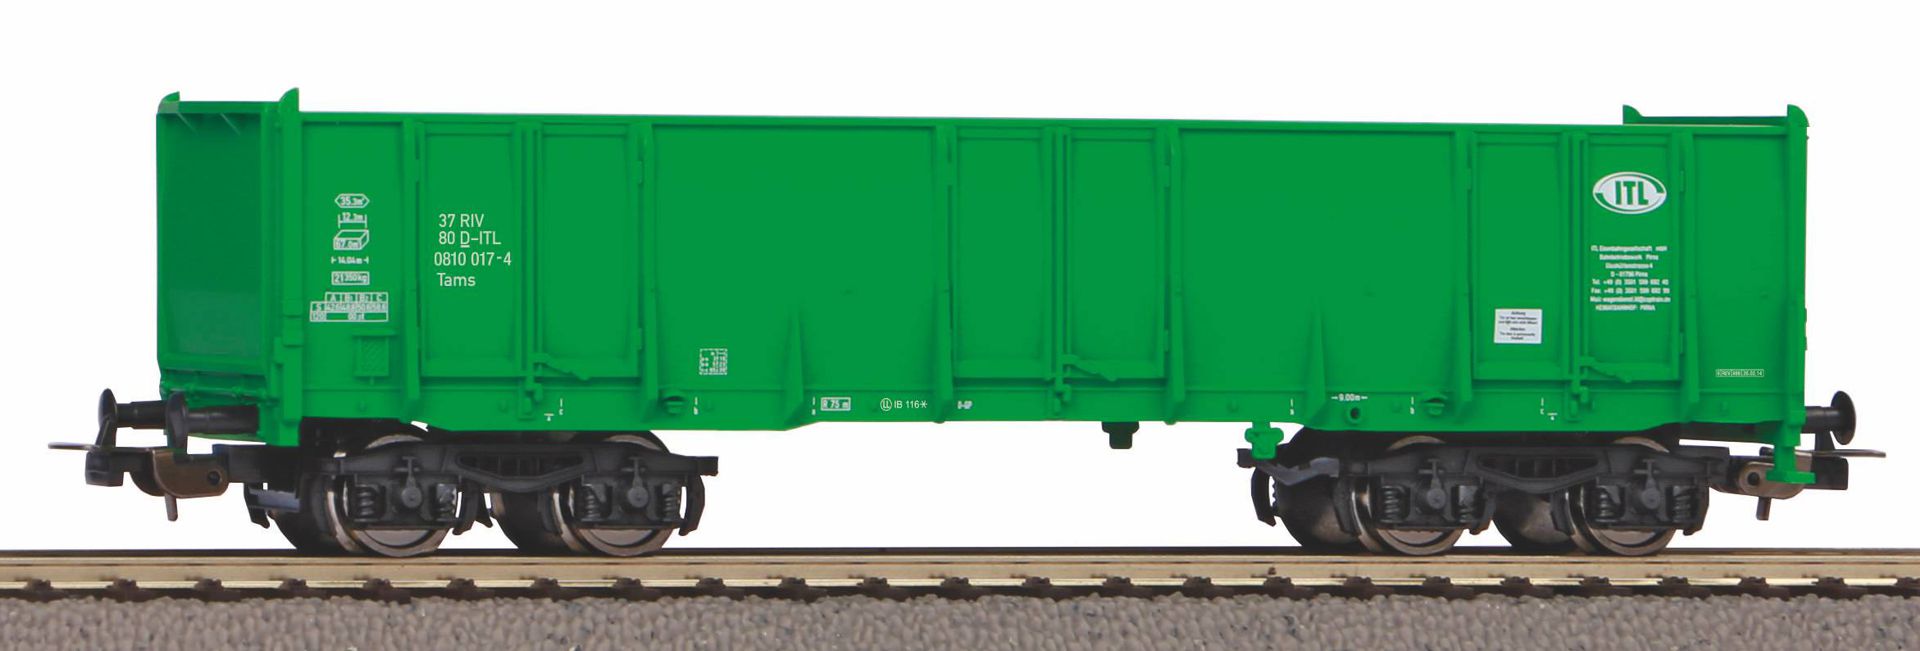 Piko 98546-C4 - Hochbordwagen Eaos , grün, ITL, Ep.VI, Betriebsnummer 4